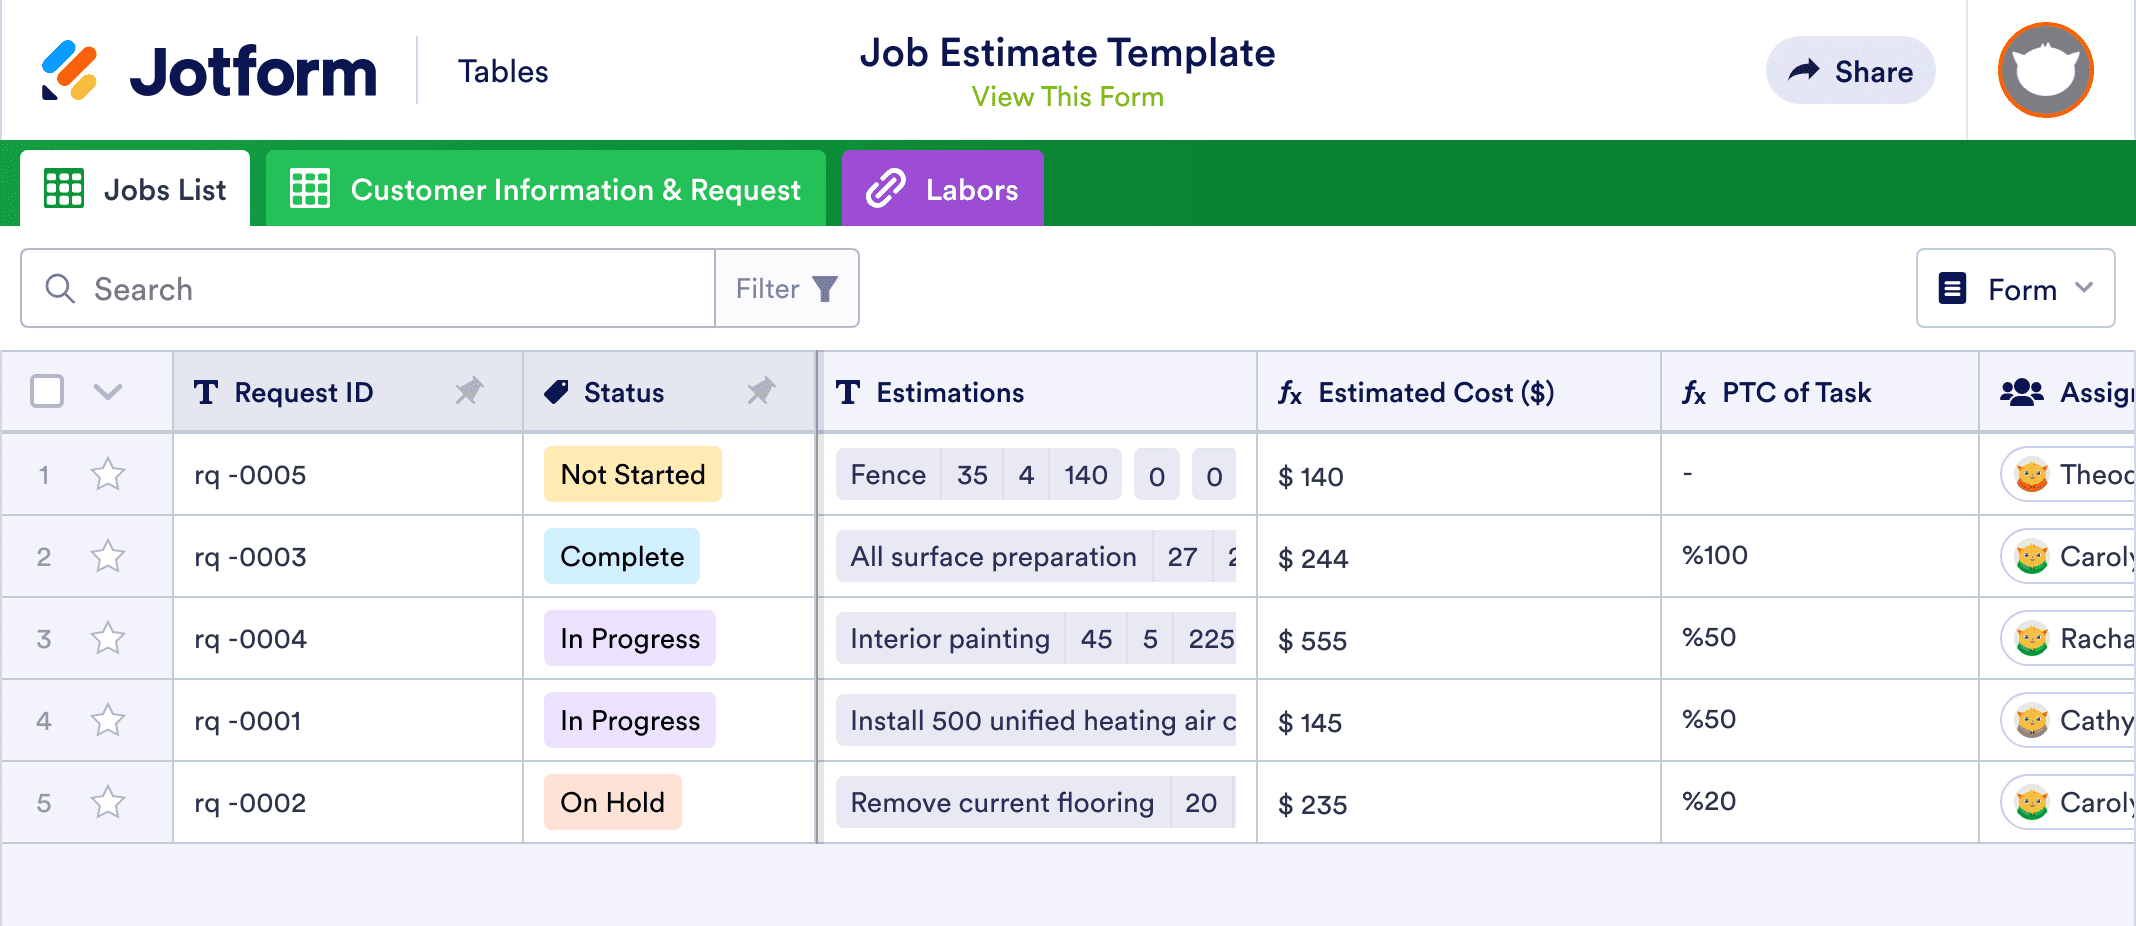 Job Estimate Template | Jotform Tables